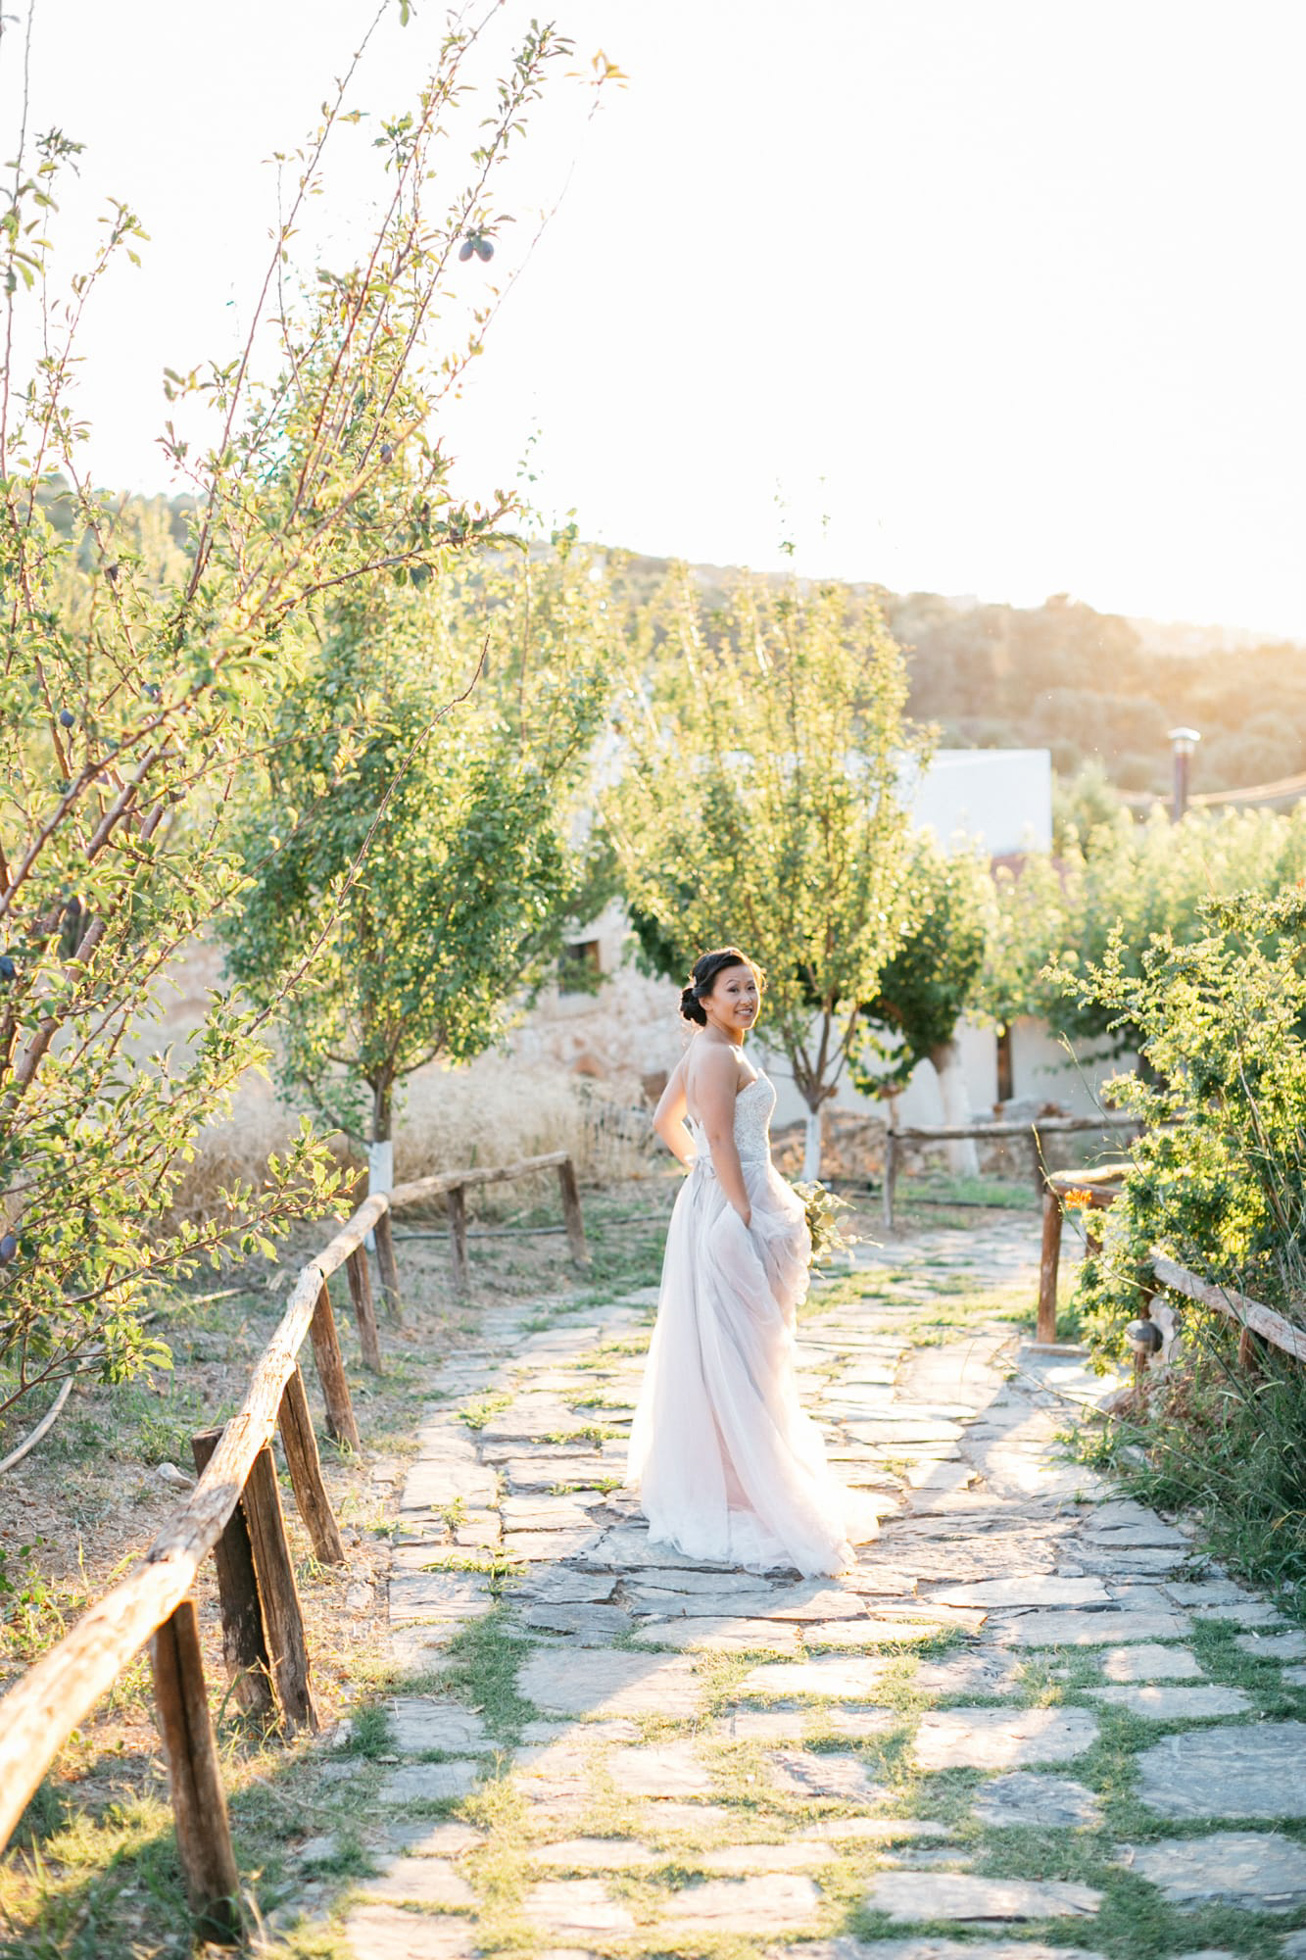 Elegant bride at her destination wedding in Agreco Farms, Grecotel, Crete, Greece.